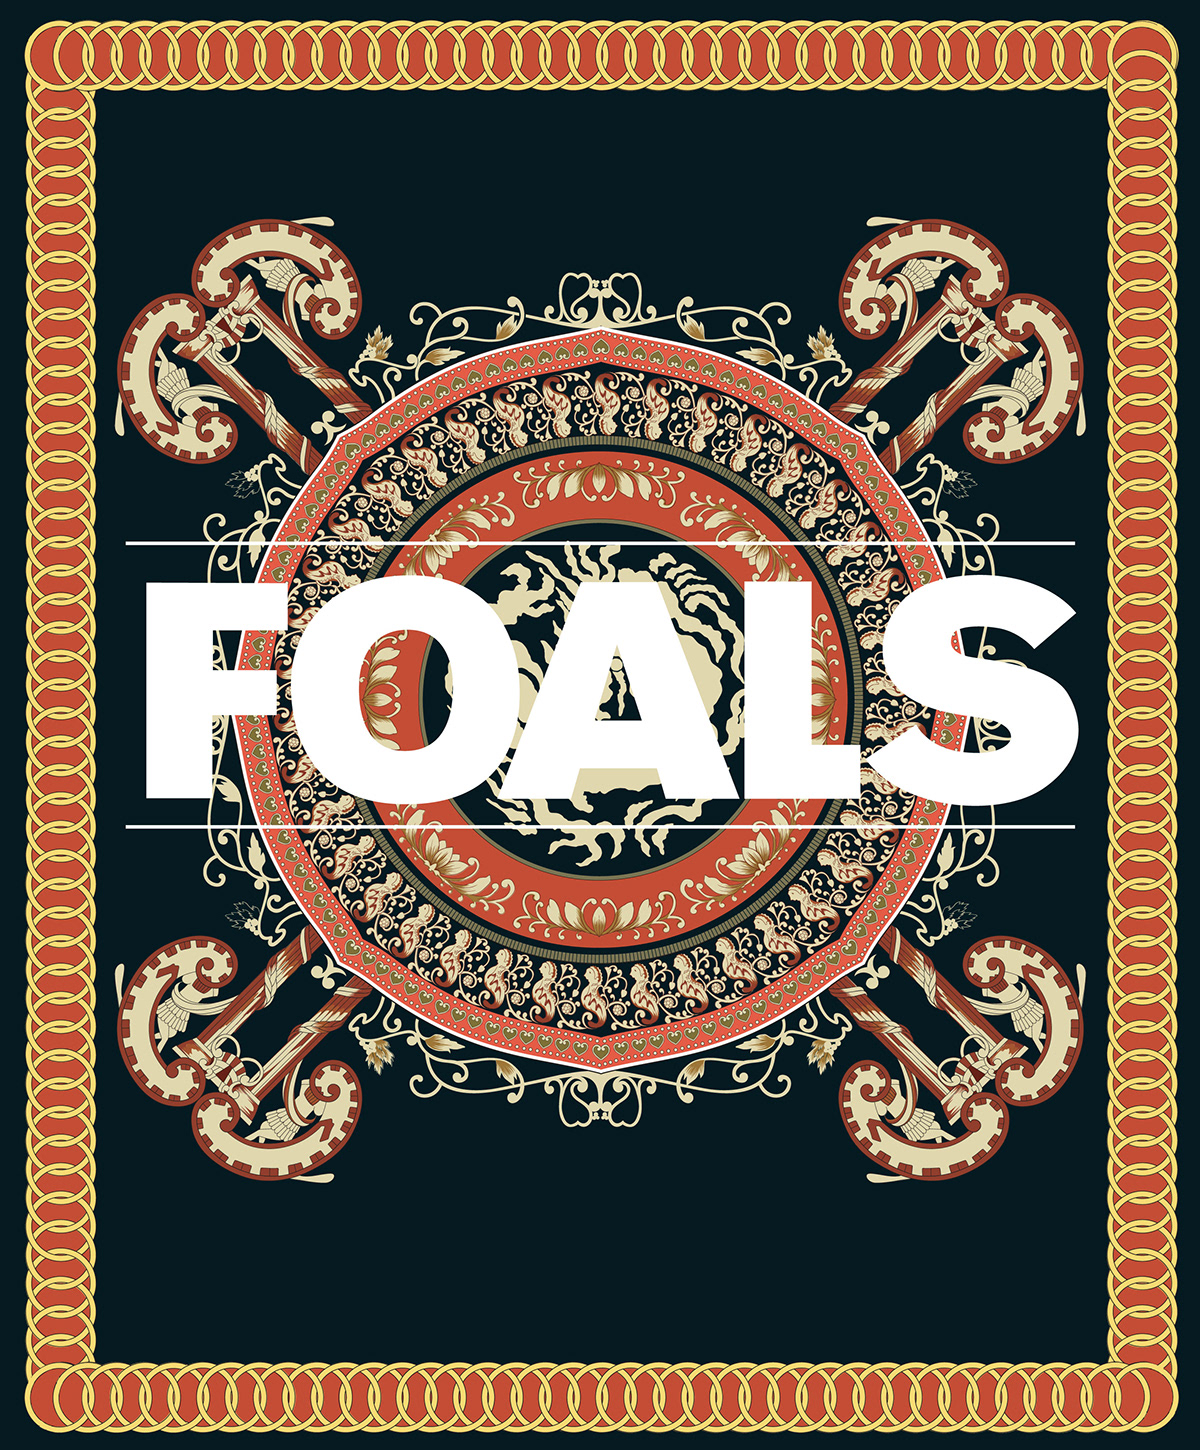 magazine foals concert yannis philipakis indie math rock article